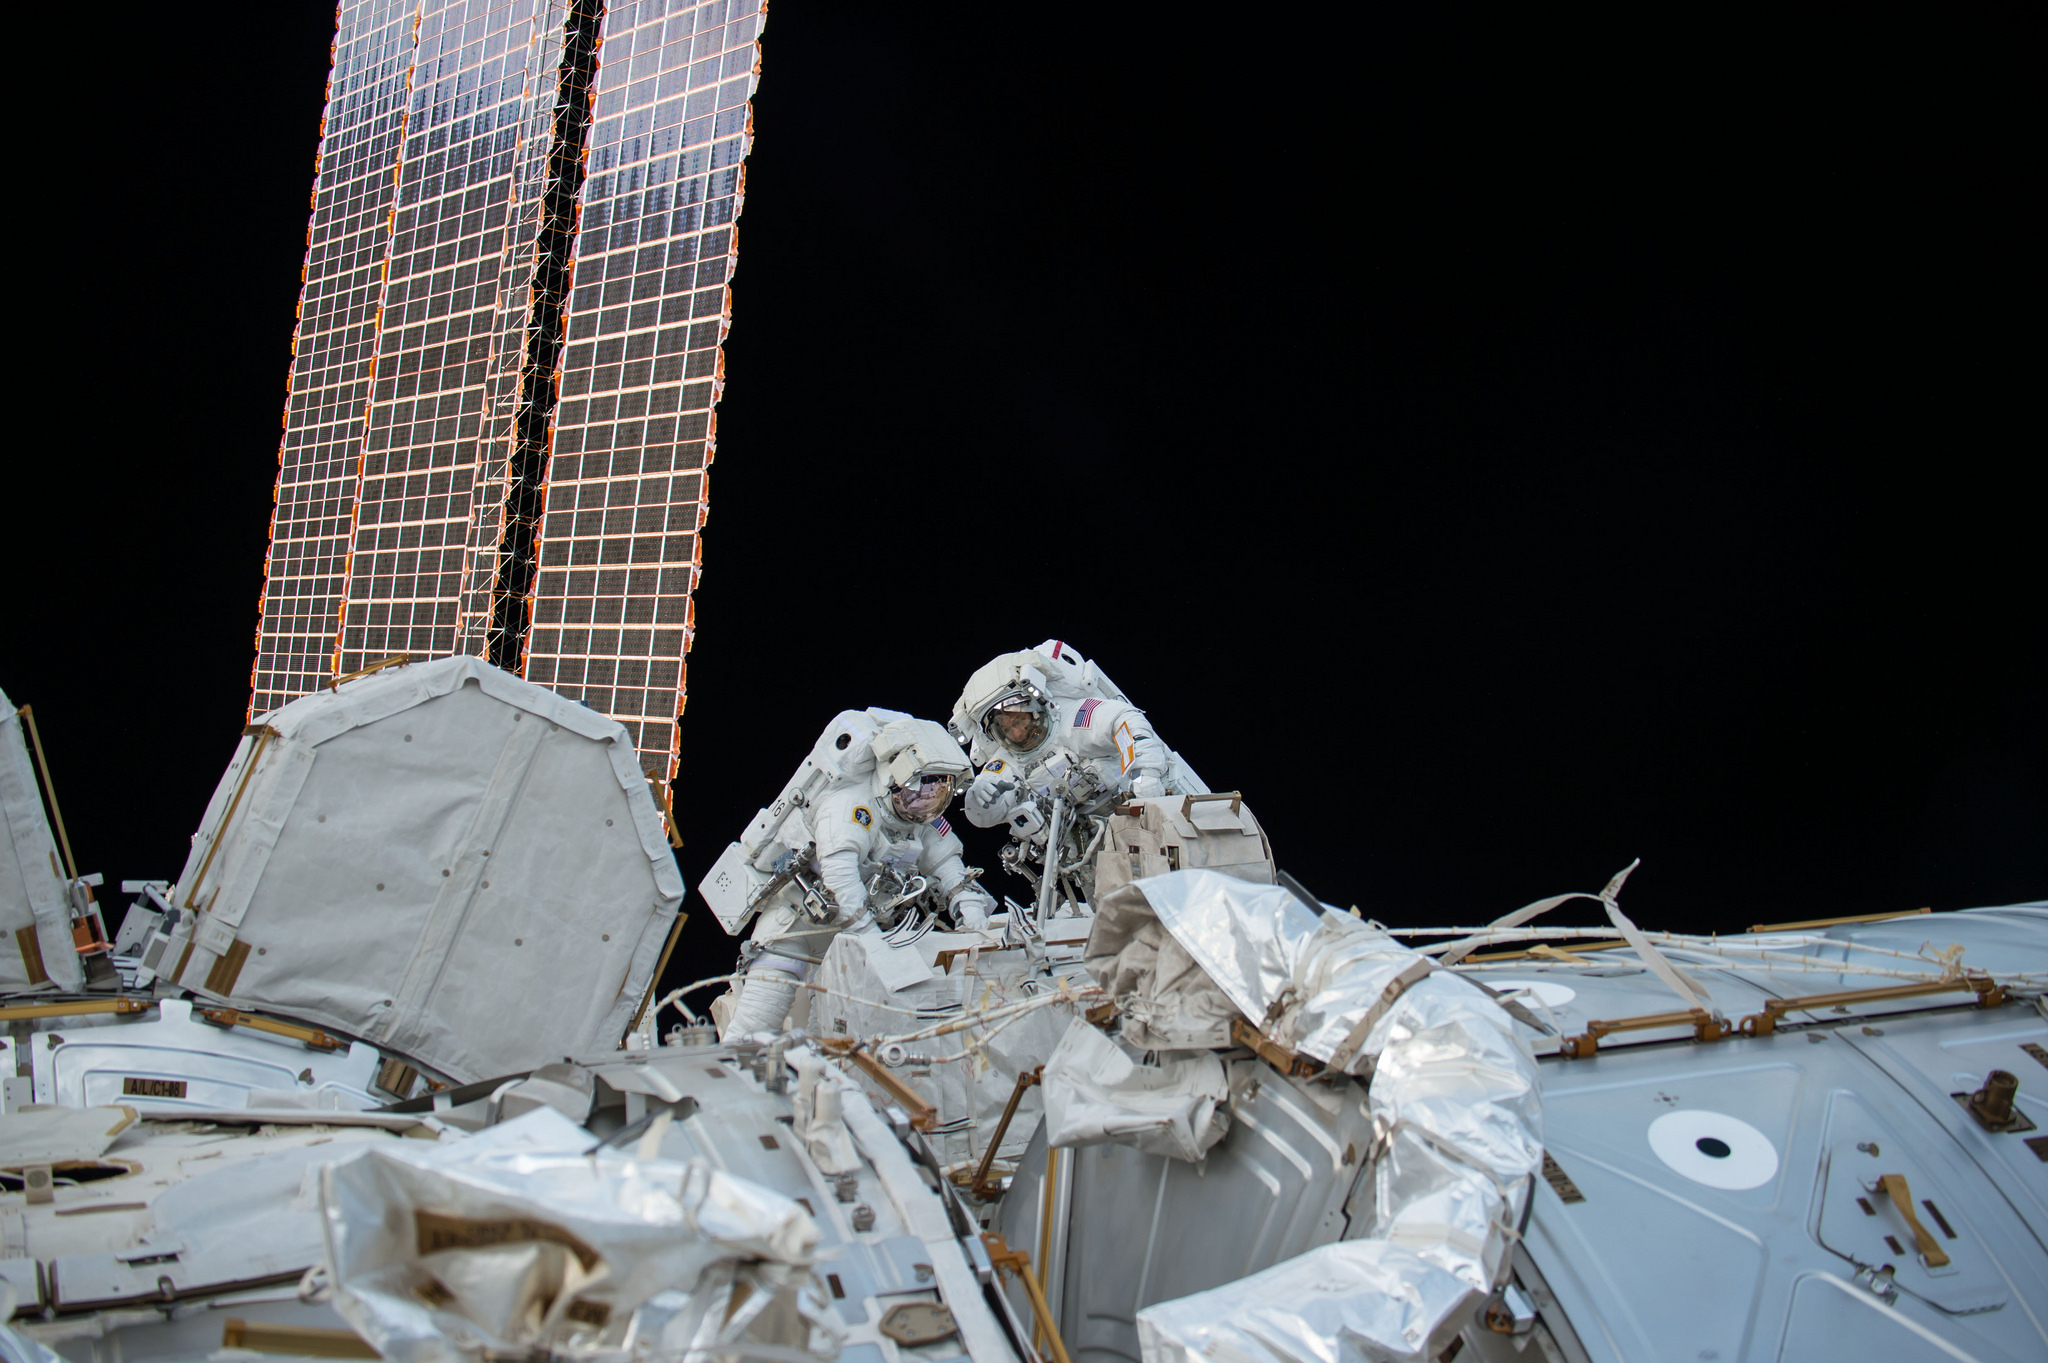 NASA astonauts Mark Vande Hei and Randy Bresnik work outside the International Space Station on Oct. 5, 2017.